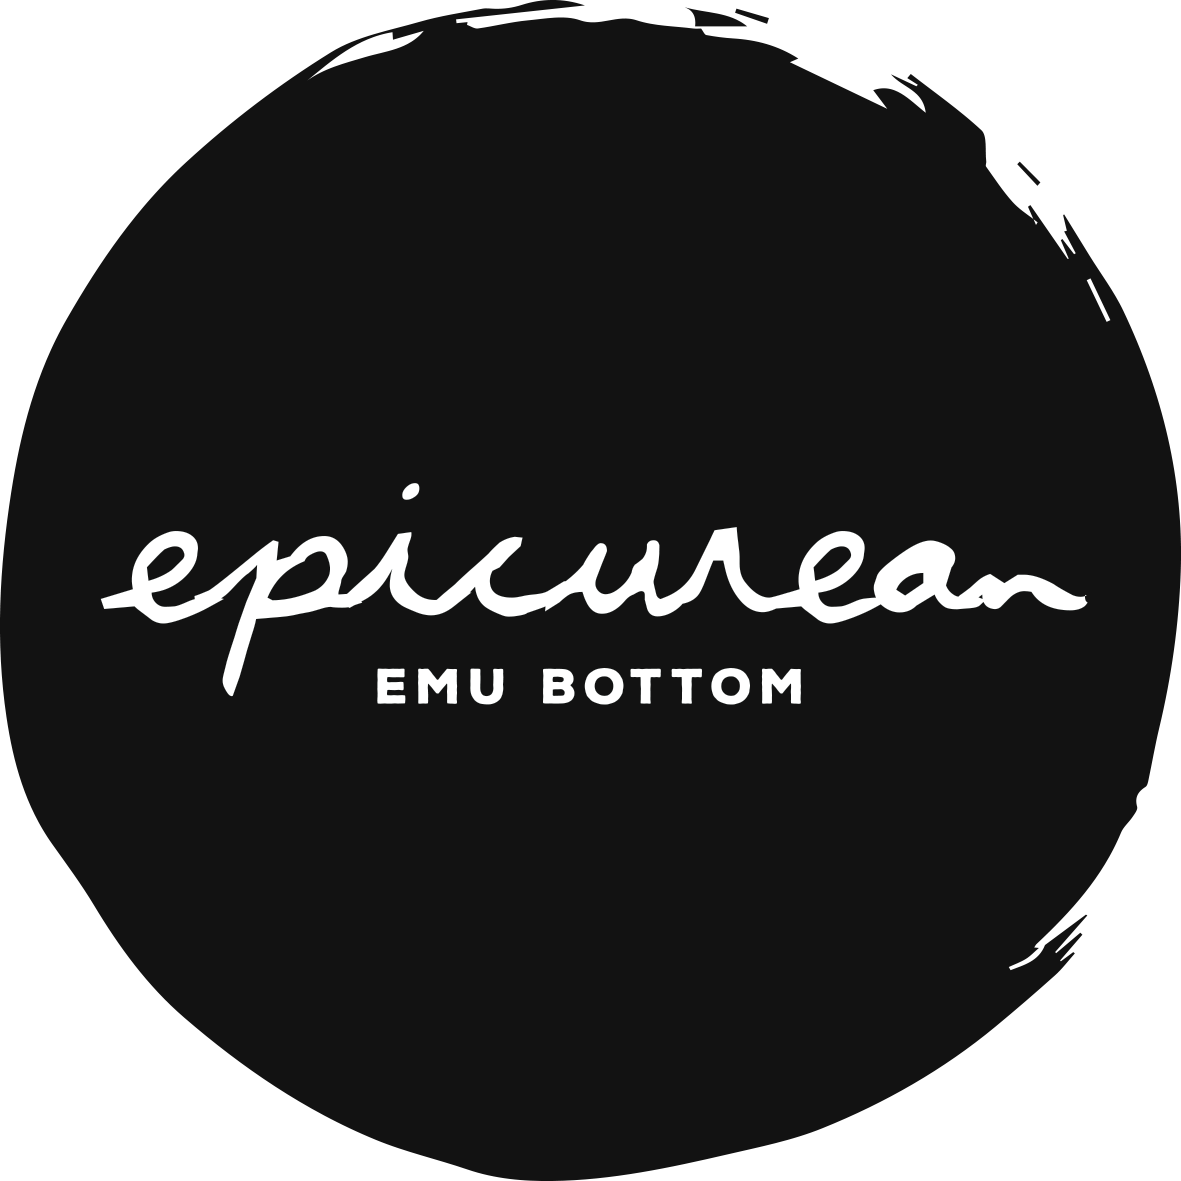 The Epicurean Emu Bottom